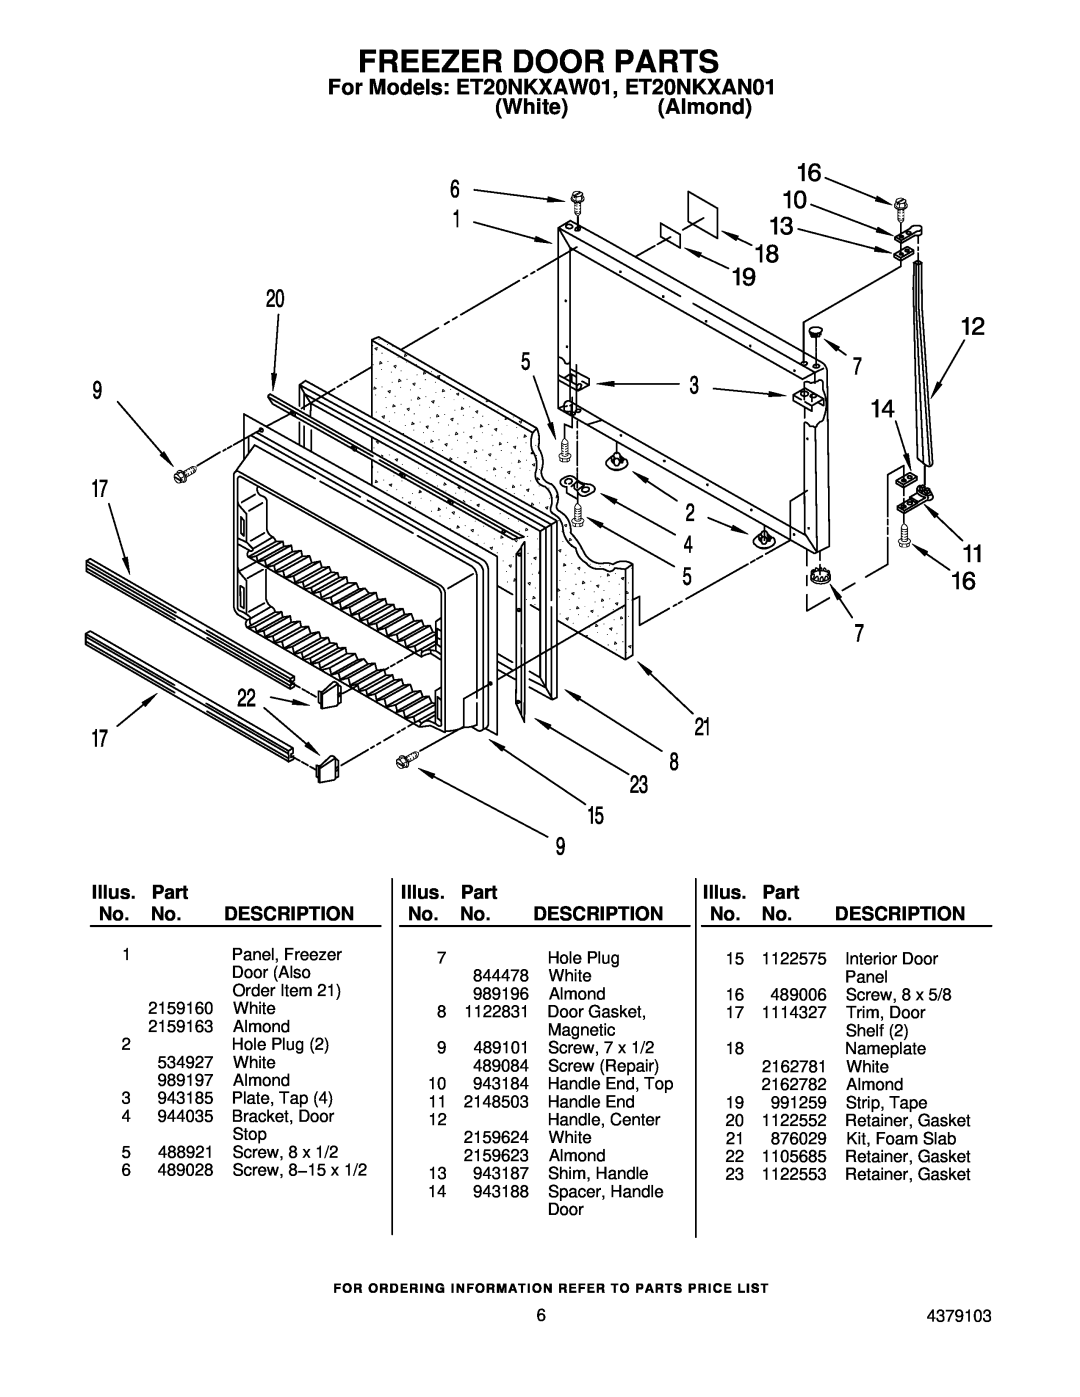 Whirlpool manual Freezer Door Parts, For Models ET20NKXAW01, ET20NKXAN01 White Almond, Illus, Description 